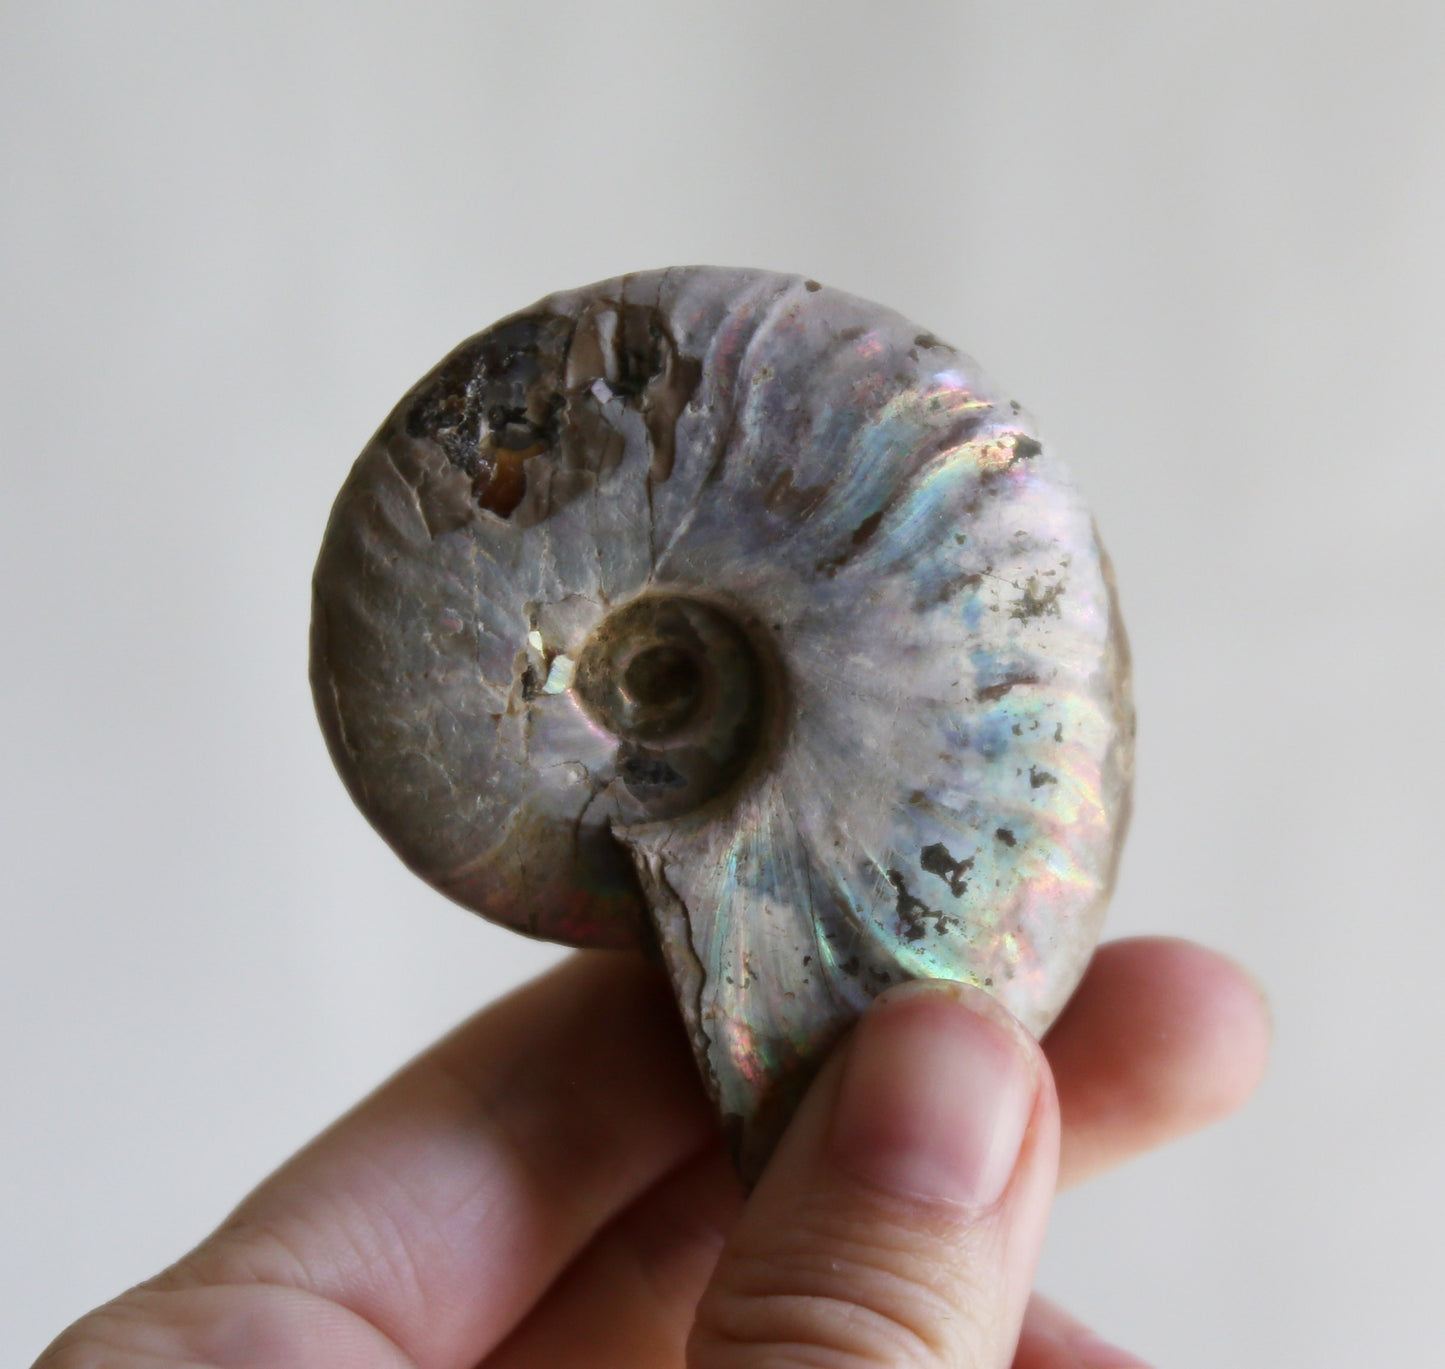 Opalized Ammonite Fossils